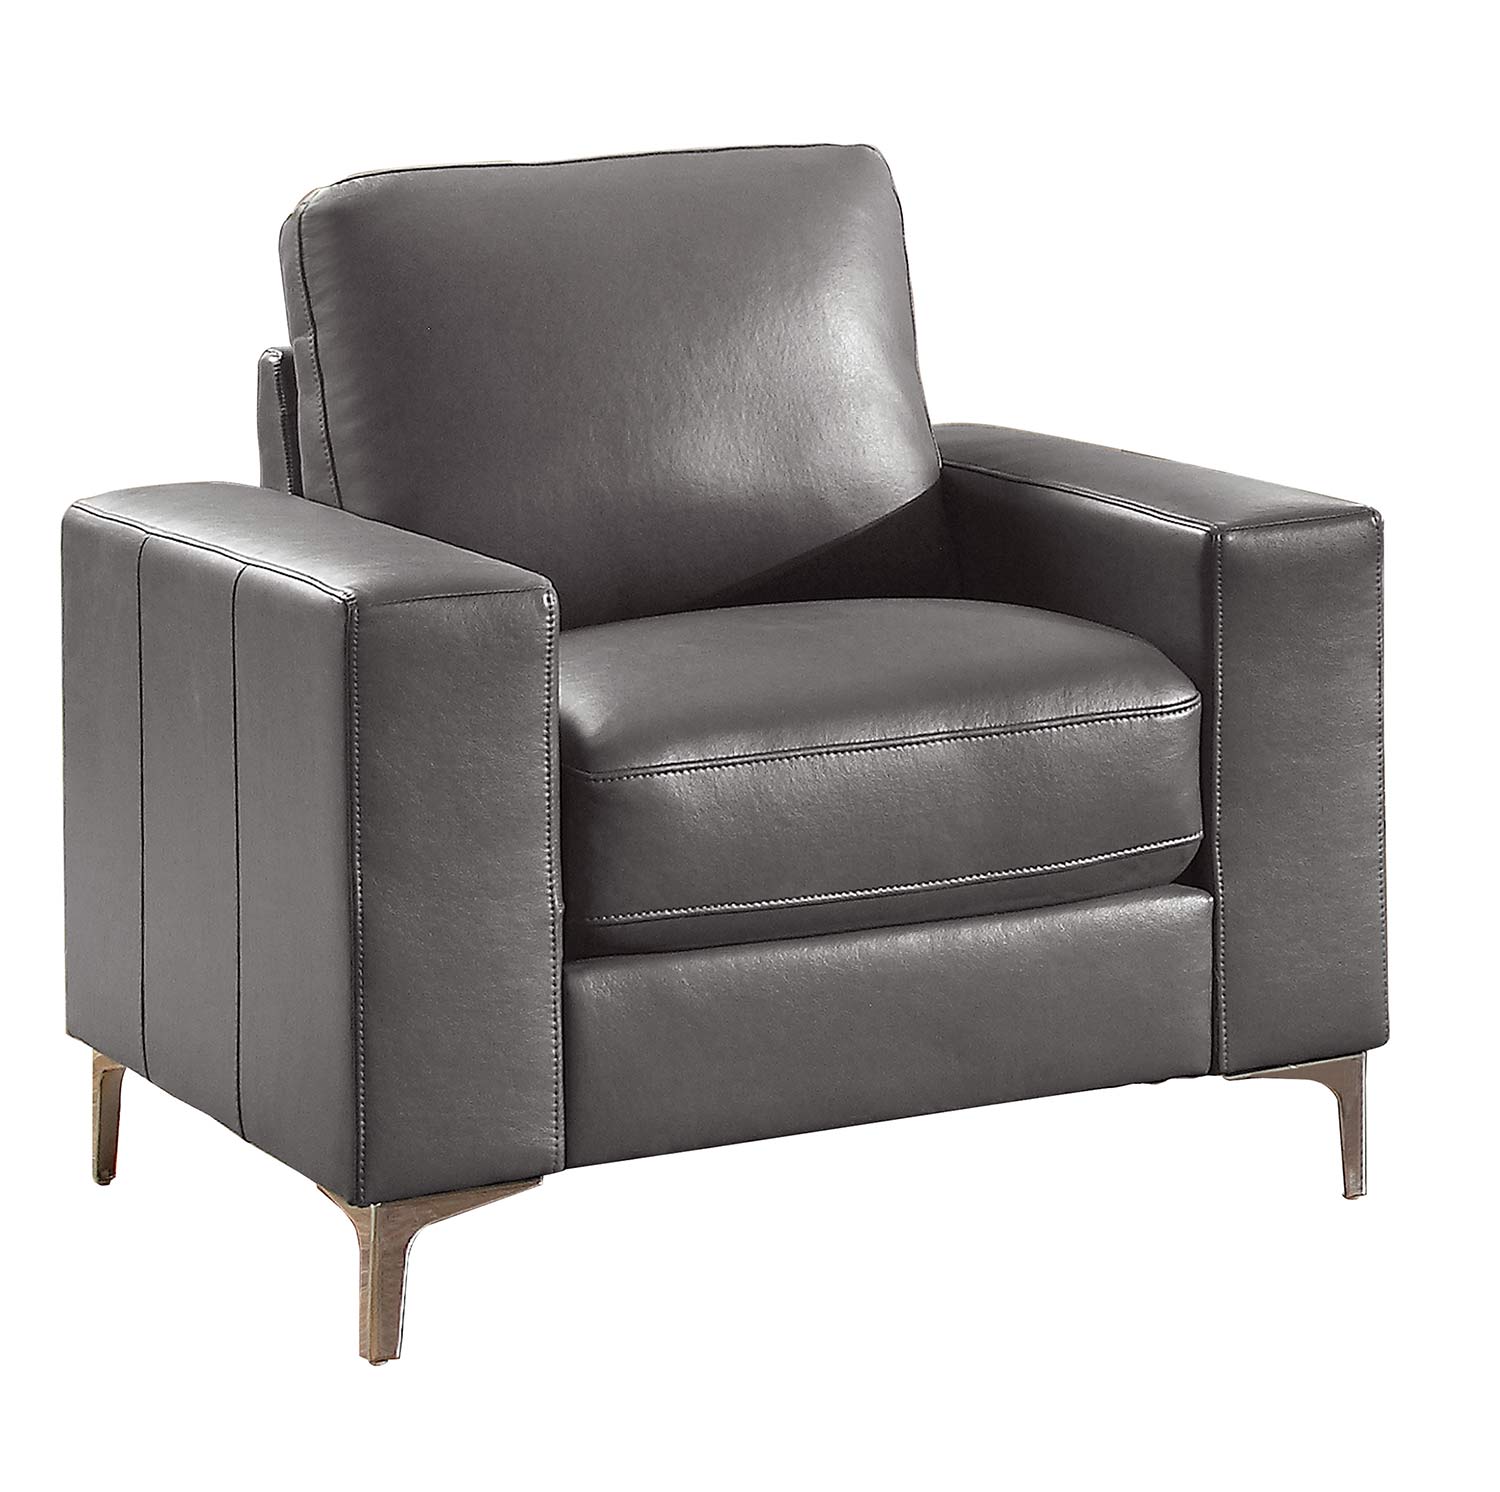 Homelegance Iniko Chair - Gray Leather Gel Match